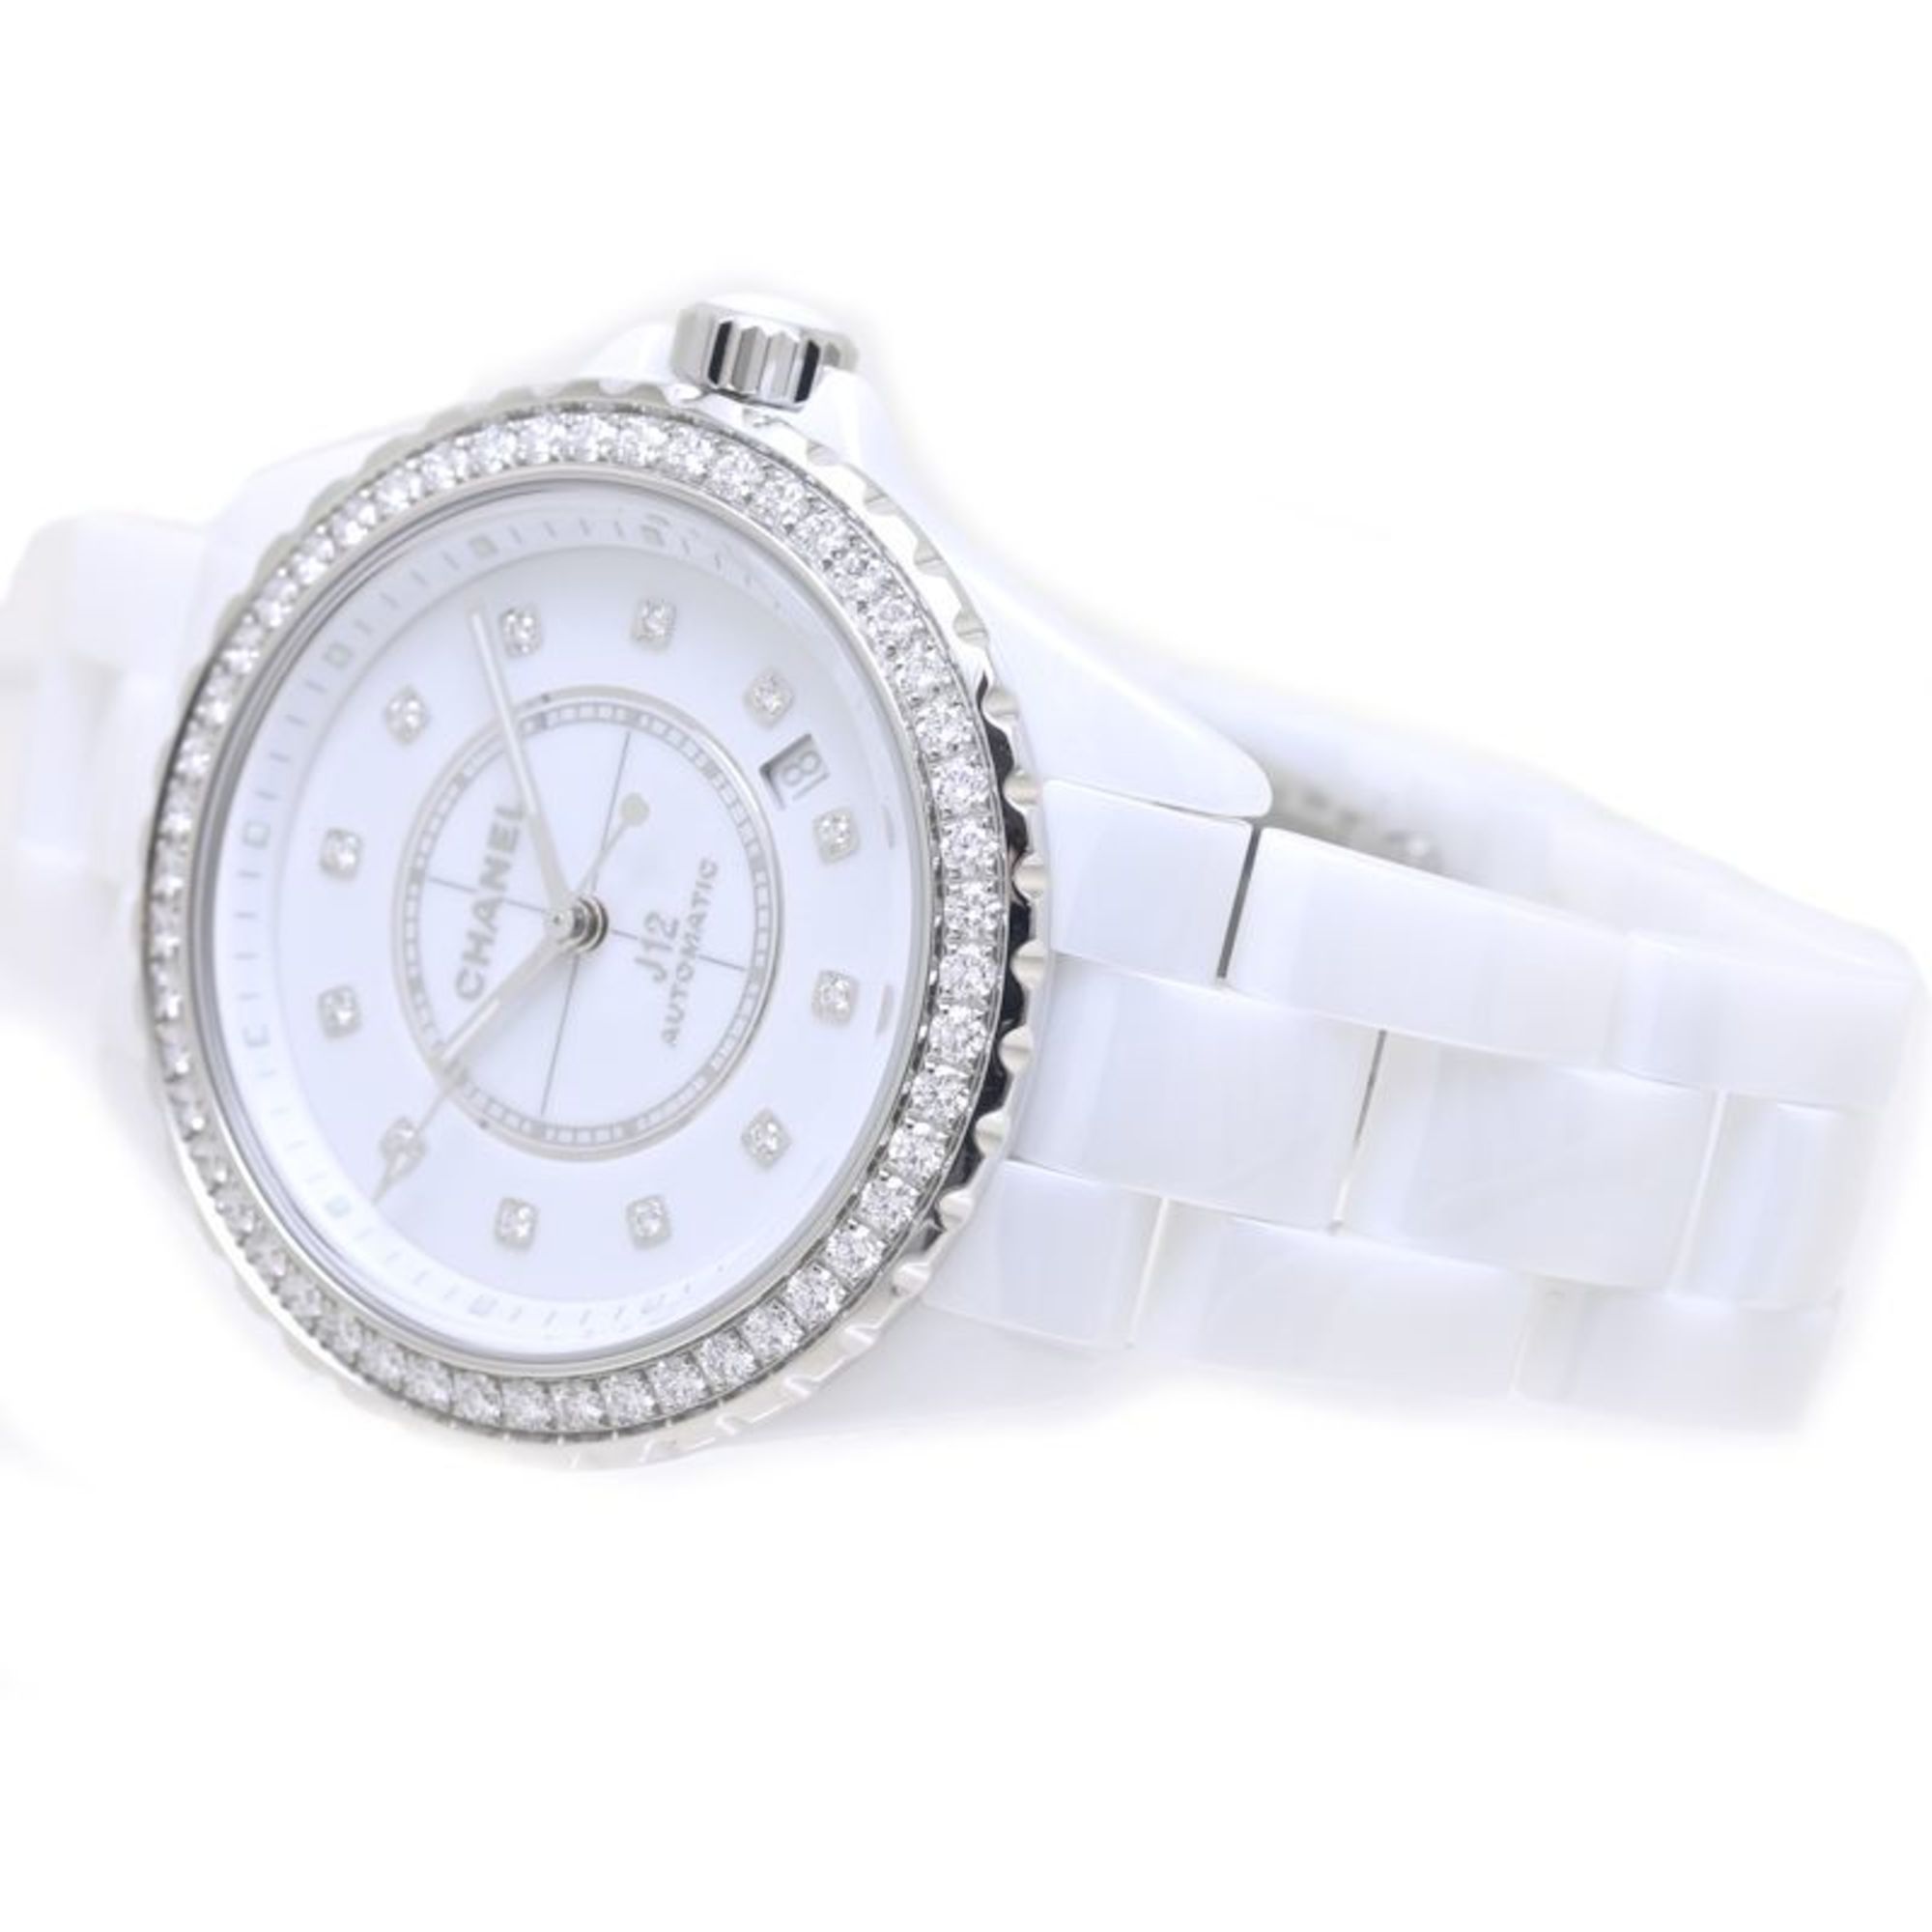 CHANEL J12 Bezel Diamond 12P H7189 White Ceramic x Stainless Steel Men's 39458 Watch